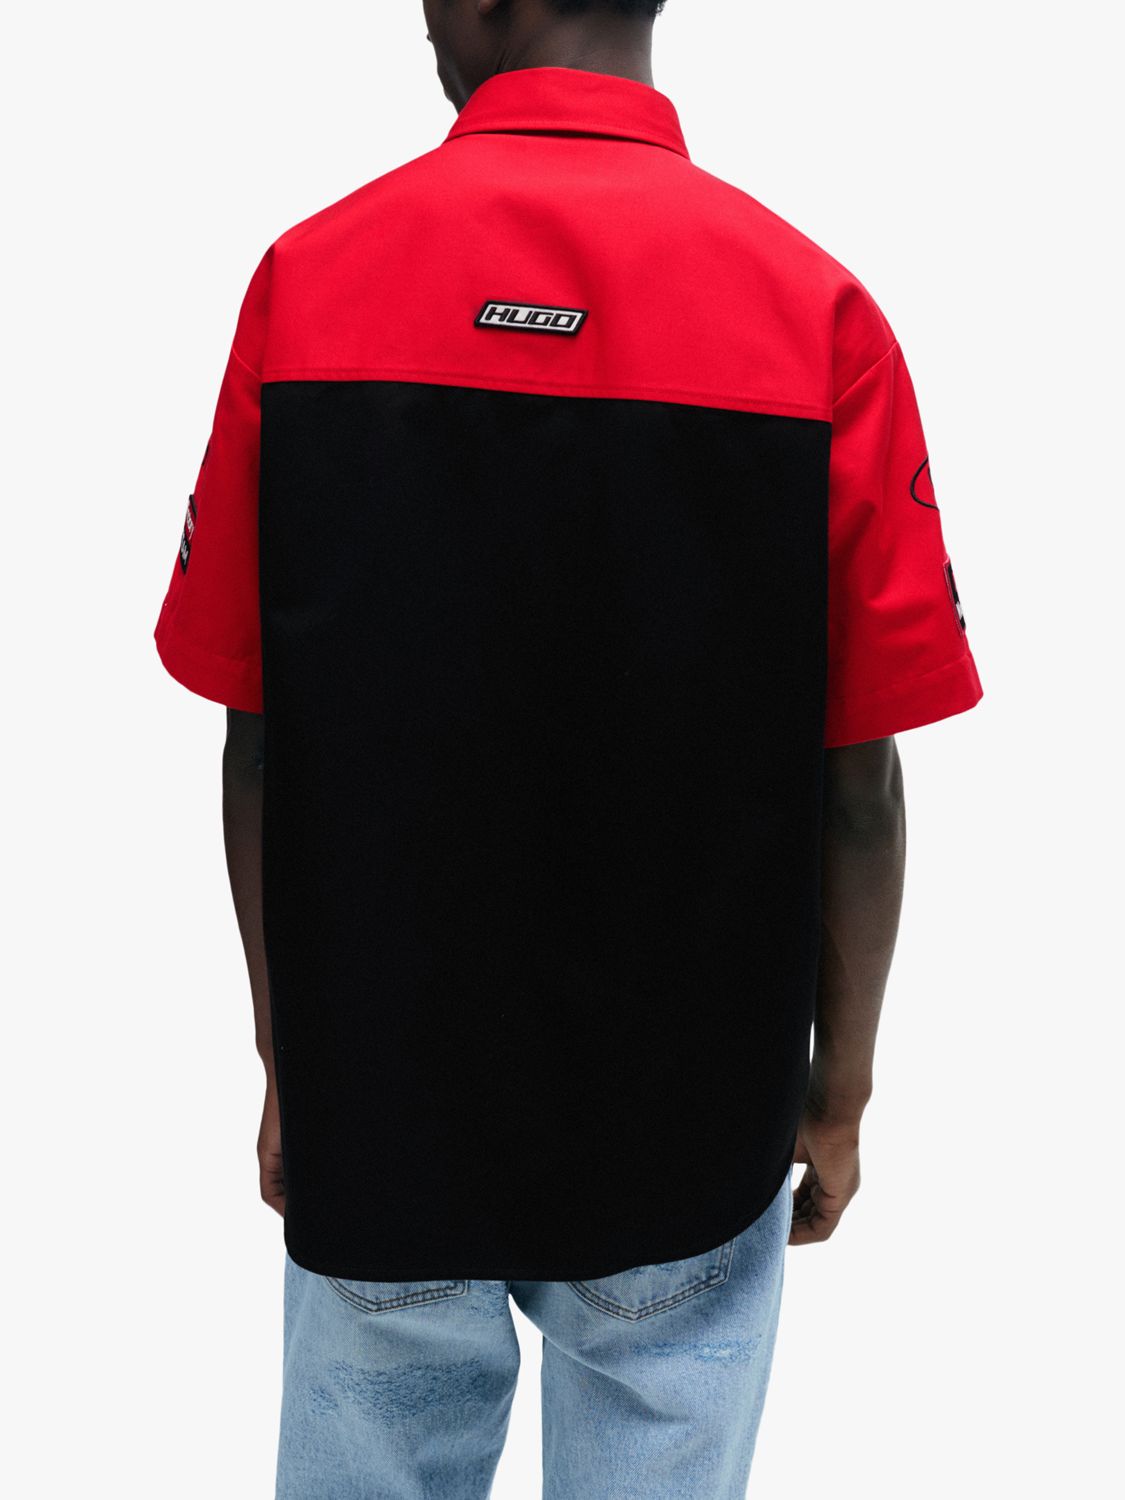 Buy HUGO Short Sleeve Nascar Shirt, Black/Multi Online at johnlewis.com